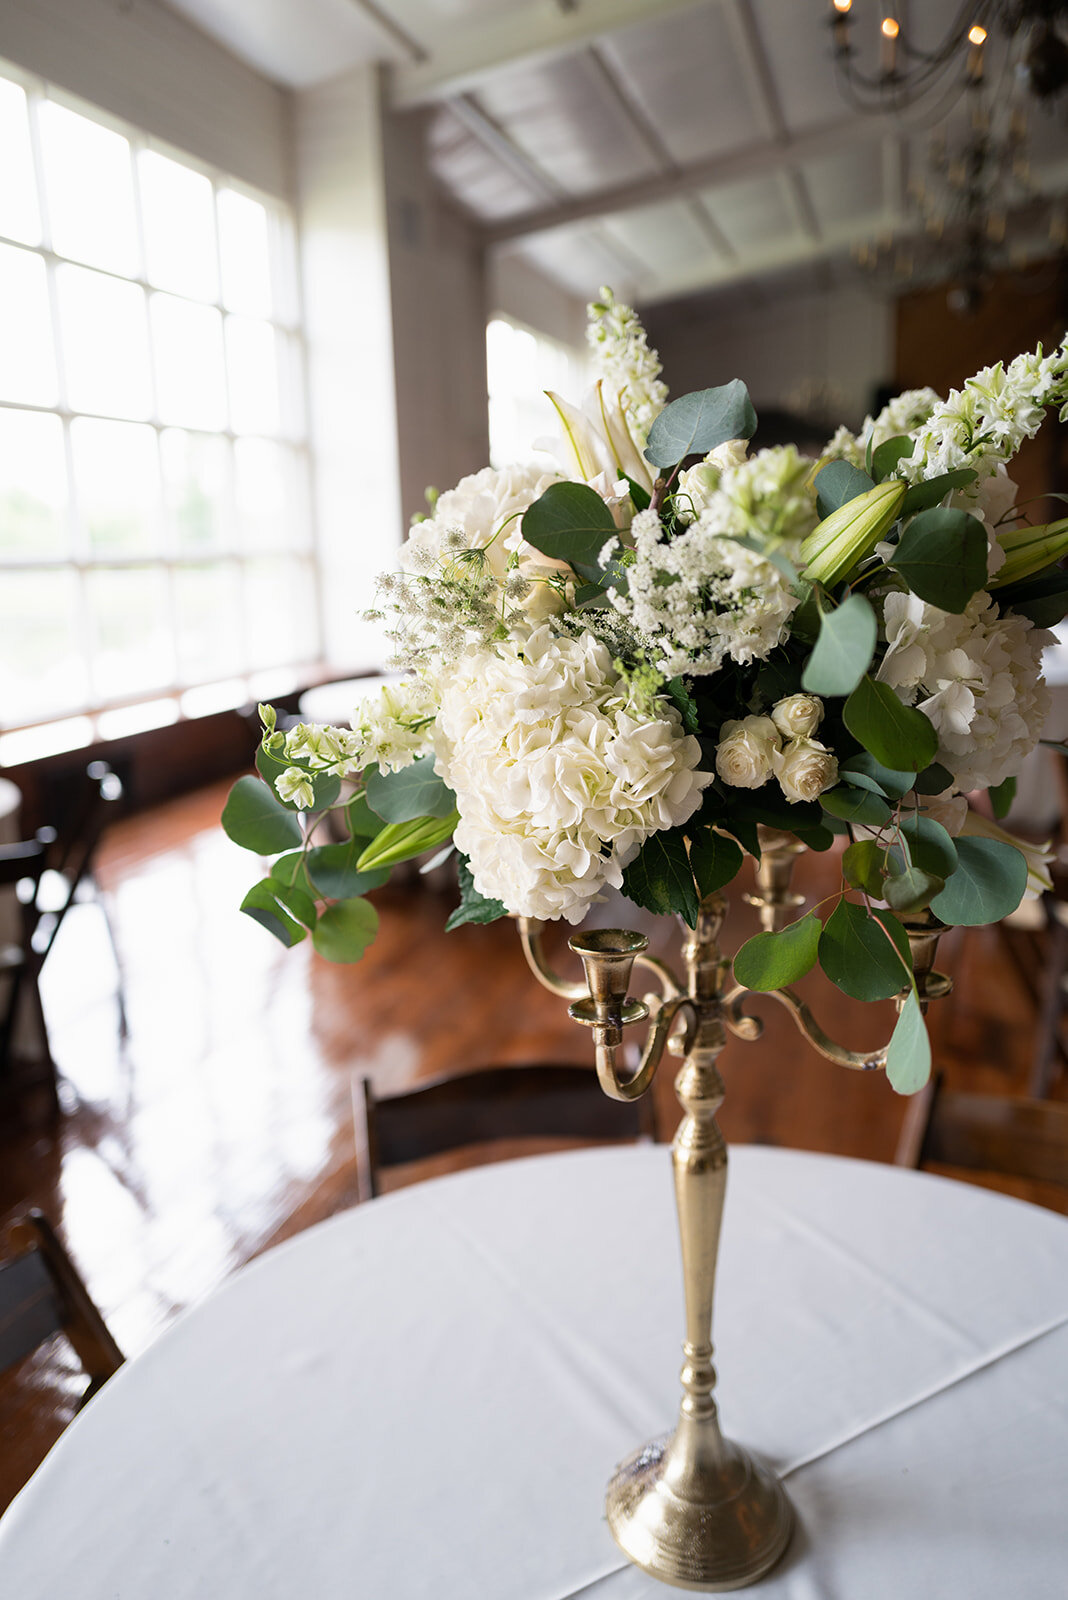 memphis-wedding-florist-venue-jefferson-oxford-white-green-hydrangeas-table-flowers